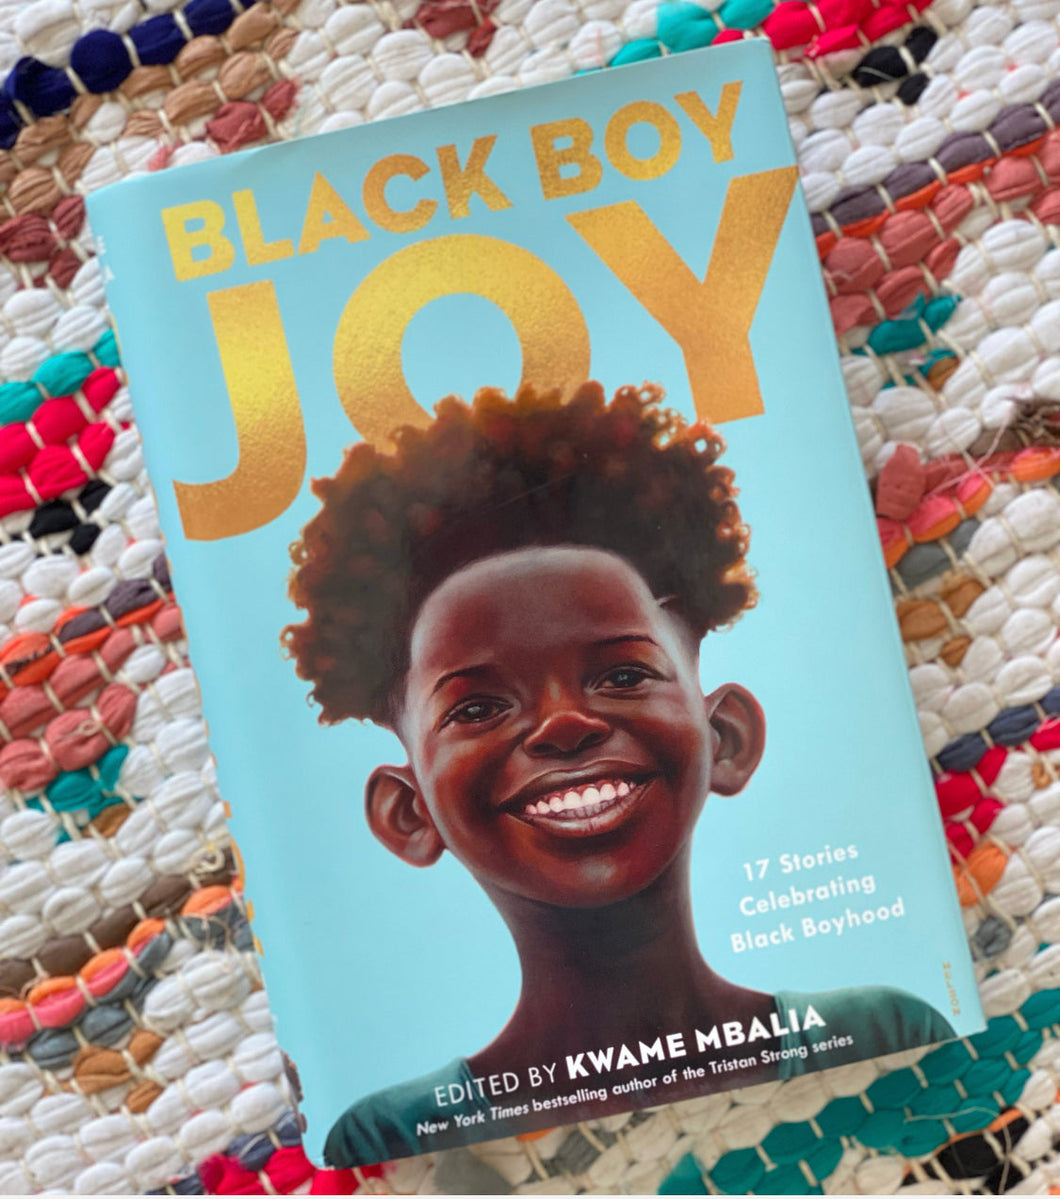 Black Boy Joy: 17 Stories Celebrating Black Boyhood [paperback] | Kwame Mbalia (Editor)